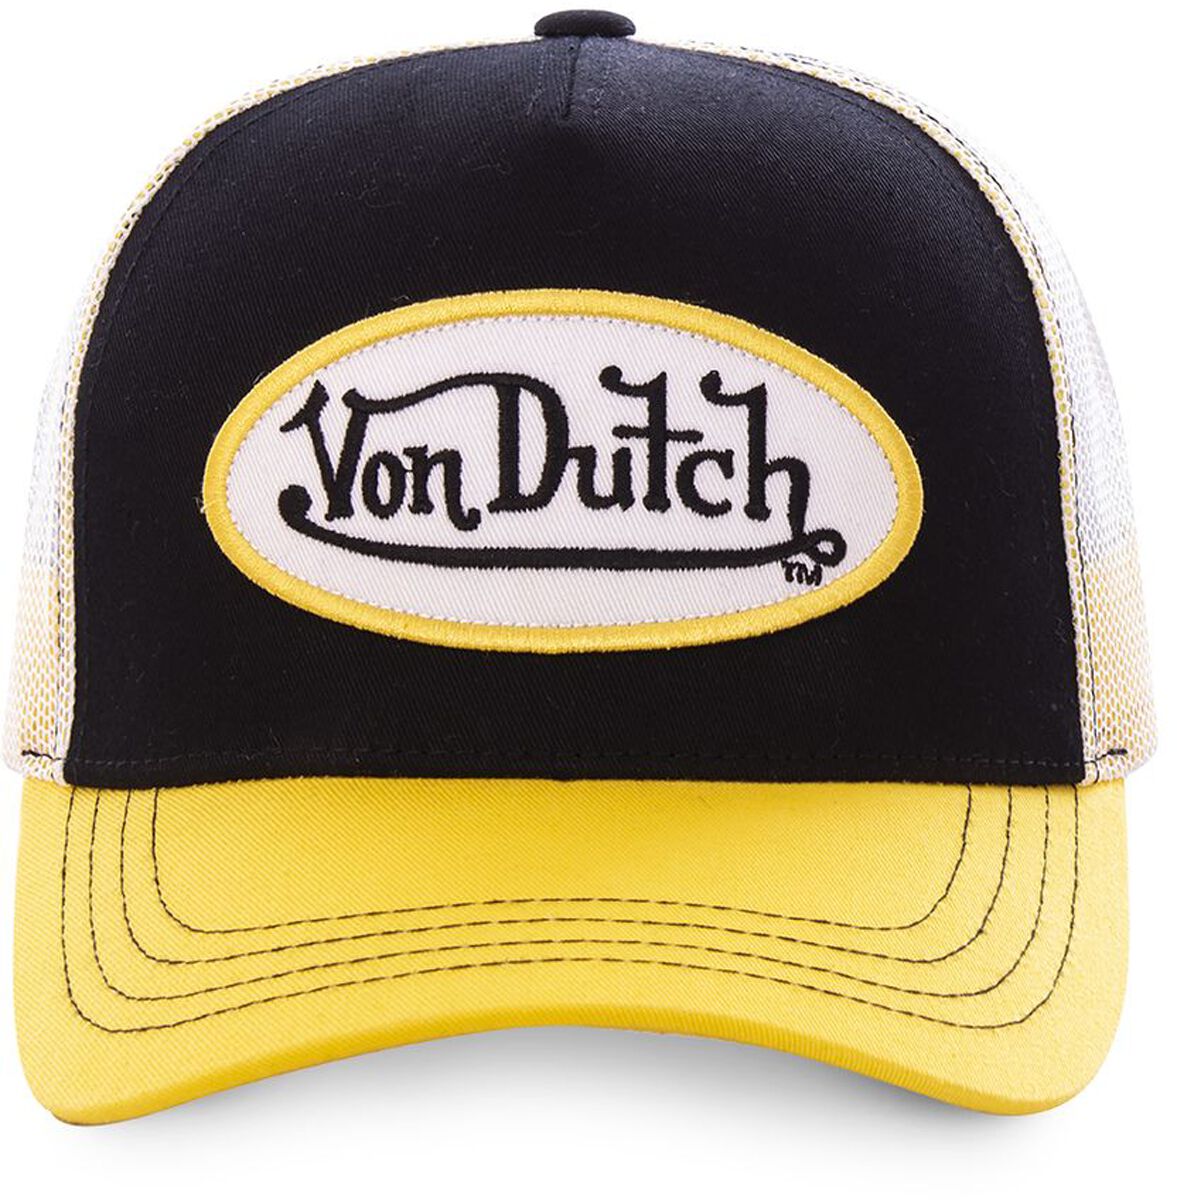 Image of Cappello di Von Dutch - VON DUTCH BASEBALL CAP WITH MESH - Unisex - nero/giallo